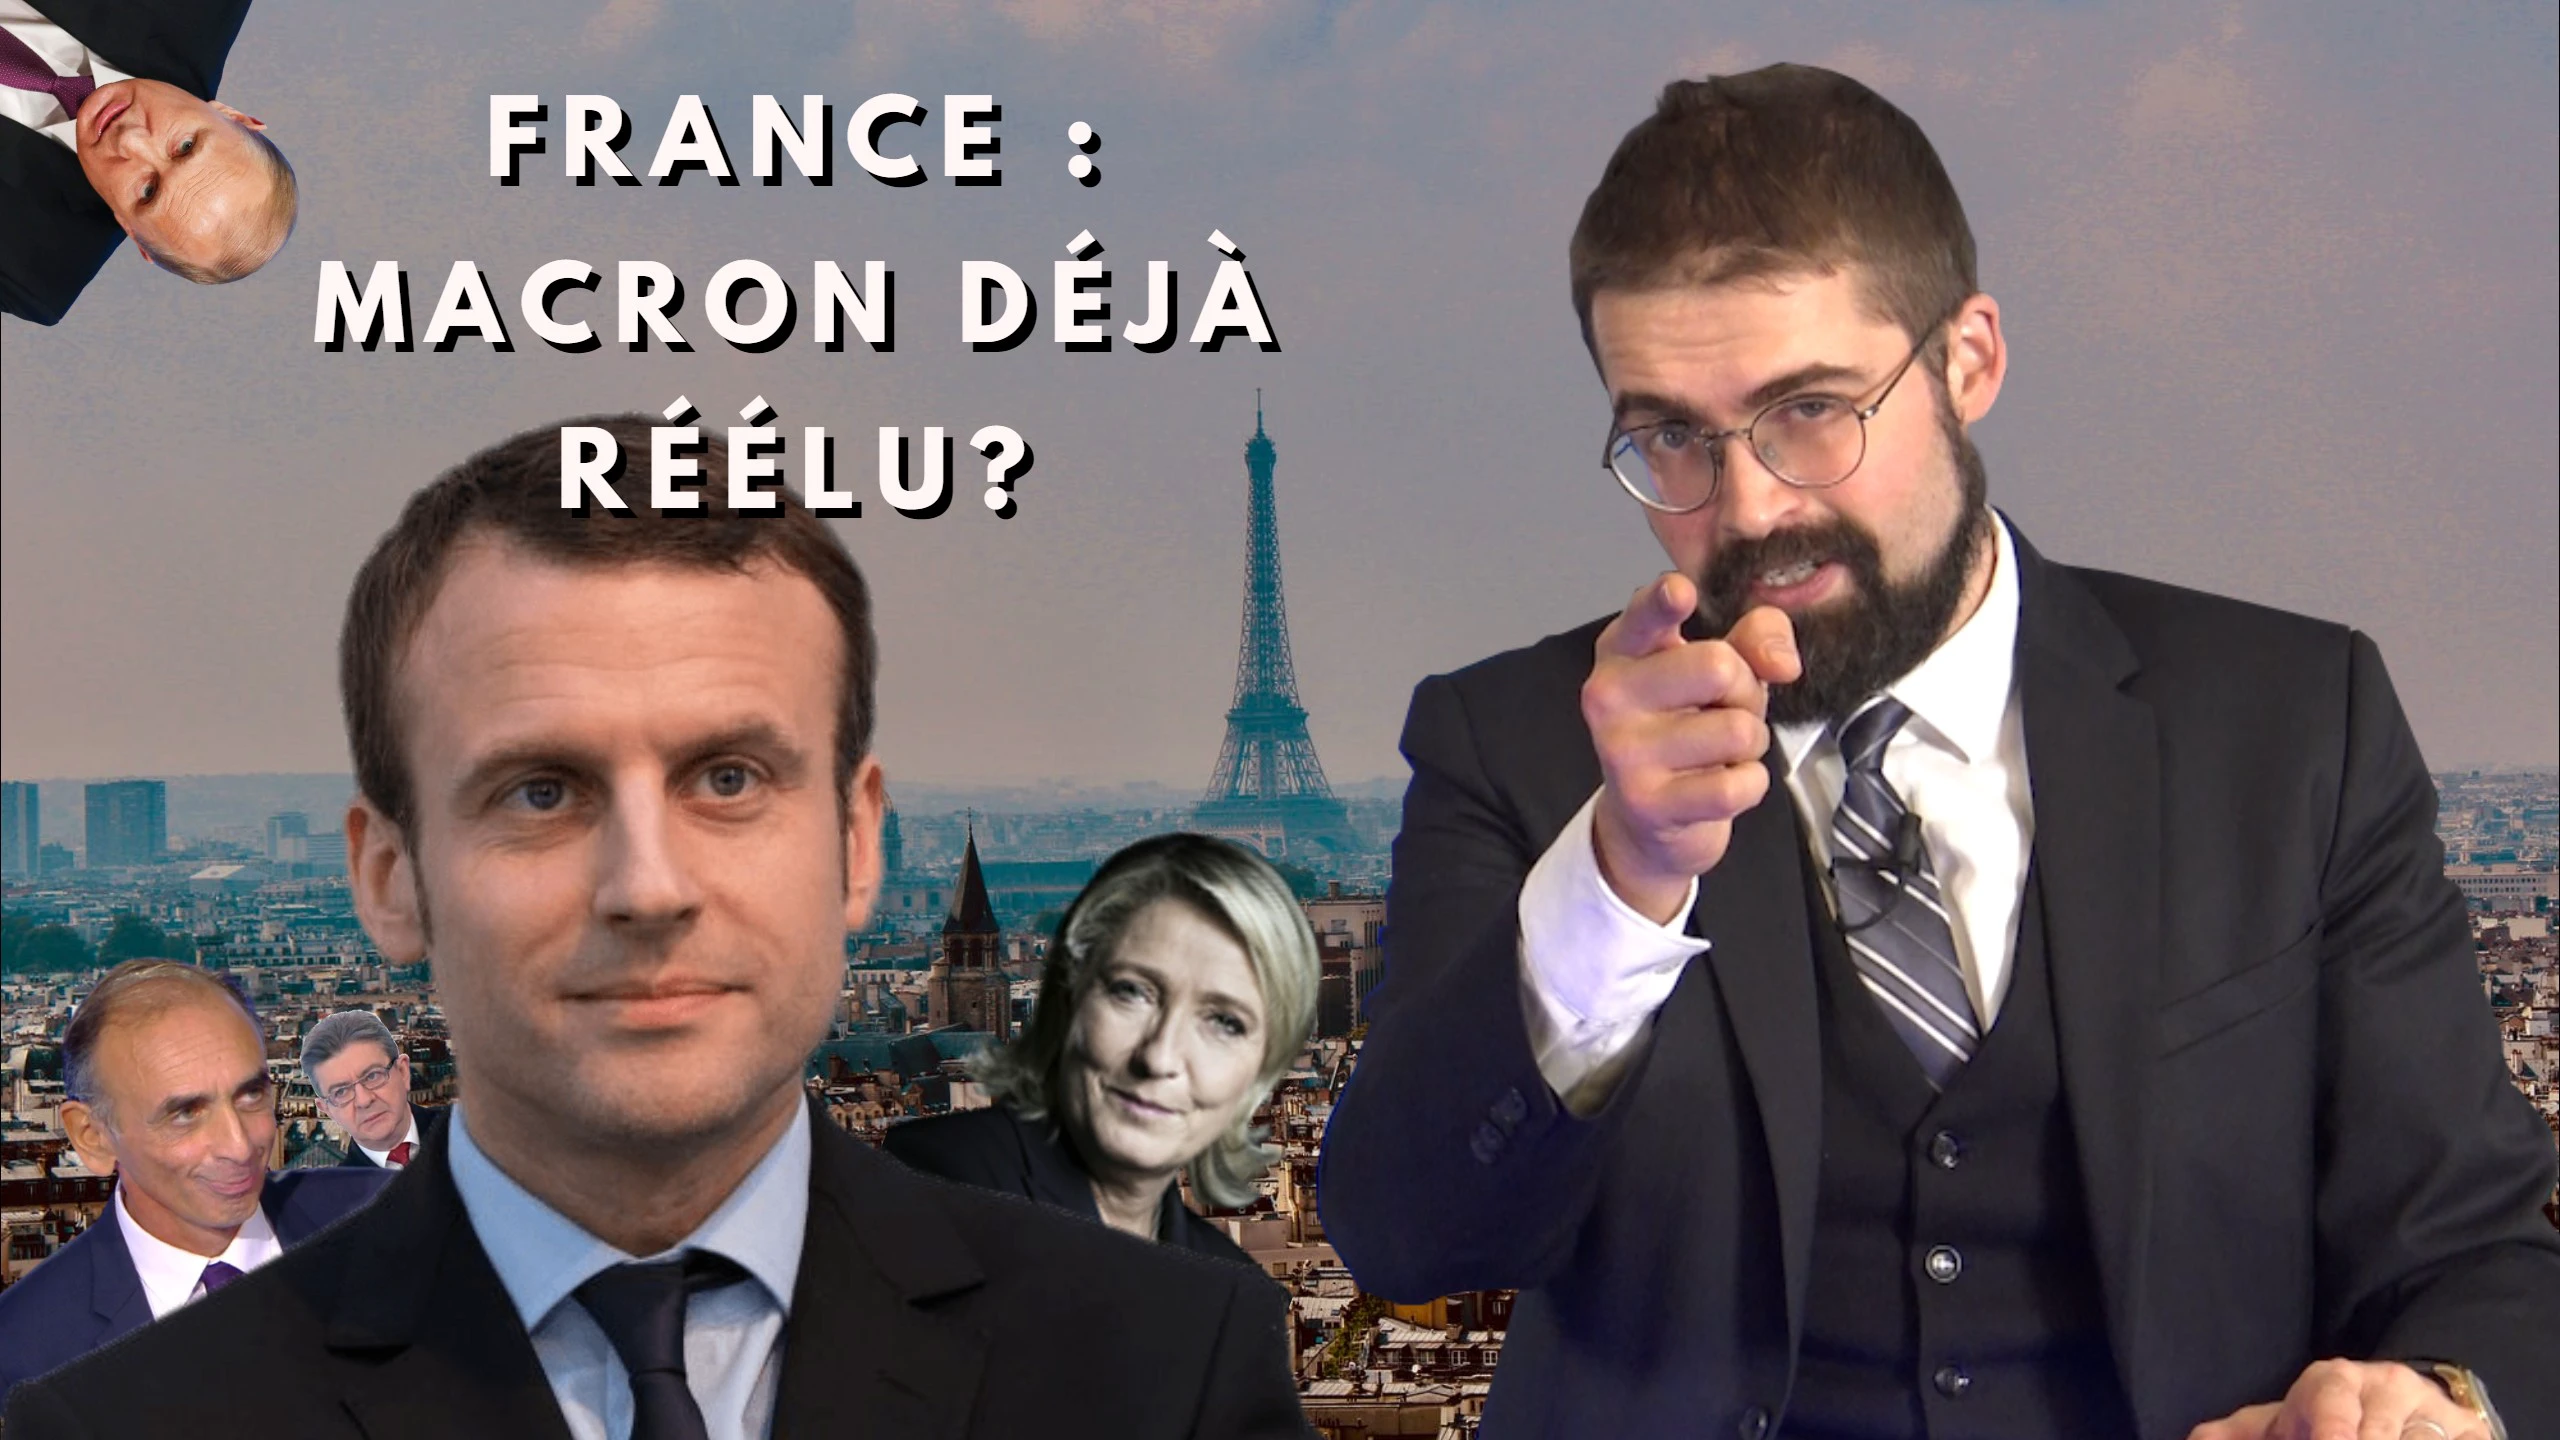 France : Macron déjà réélu? [EN DIRECT]